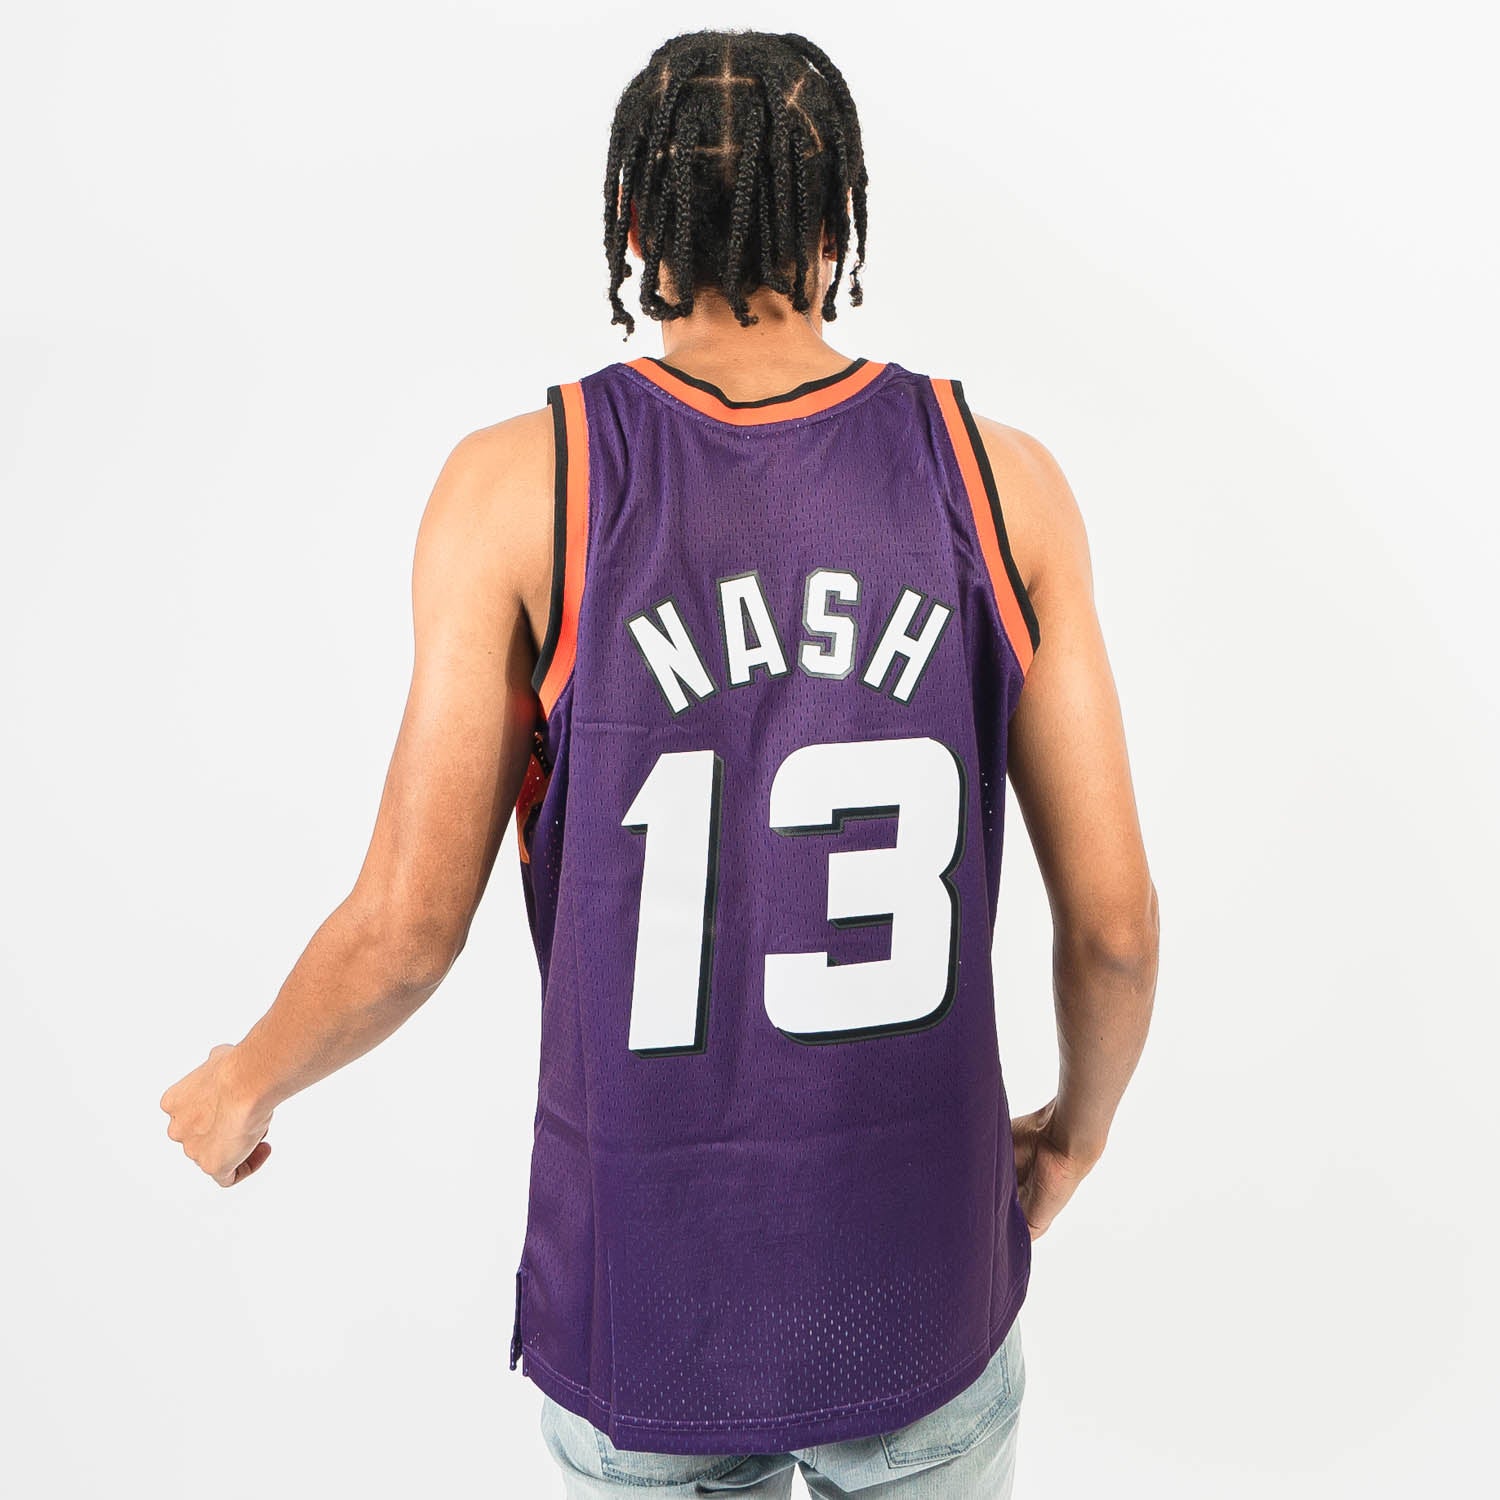 NBA Steve Nash Jersey, Basketball Collection, NBA Steve Nash Jersey Gear